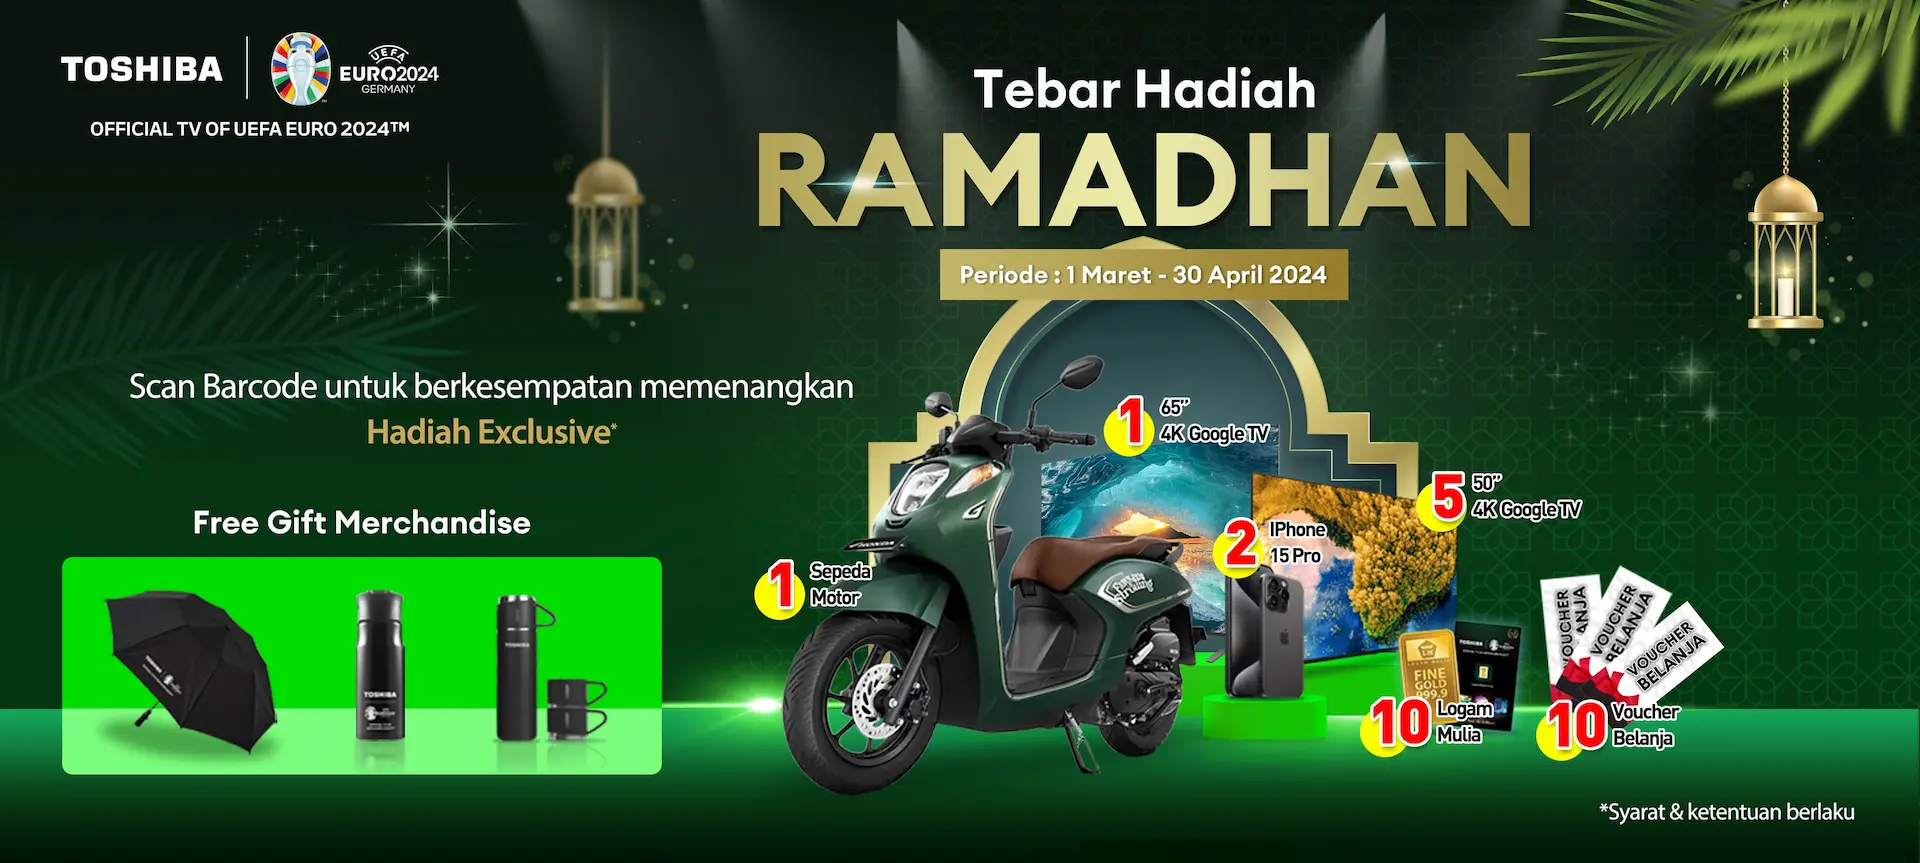 Undian Tebar Hadiah Ramadhan Toshiba TV Grandprize Motor